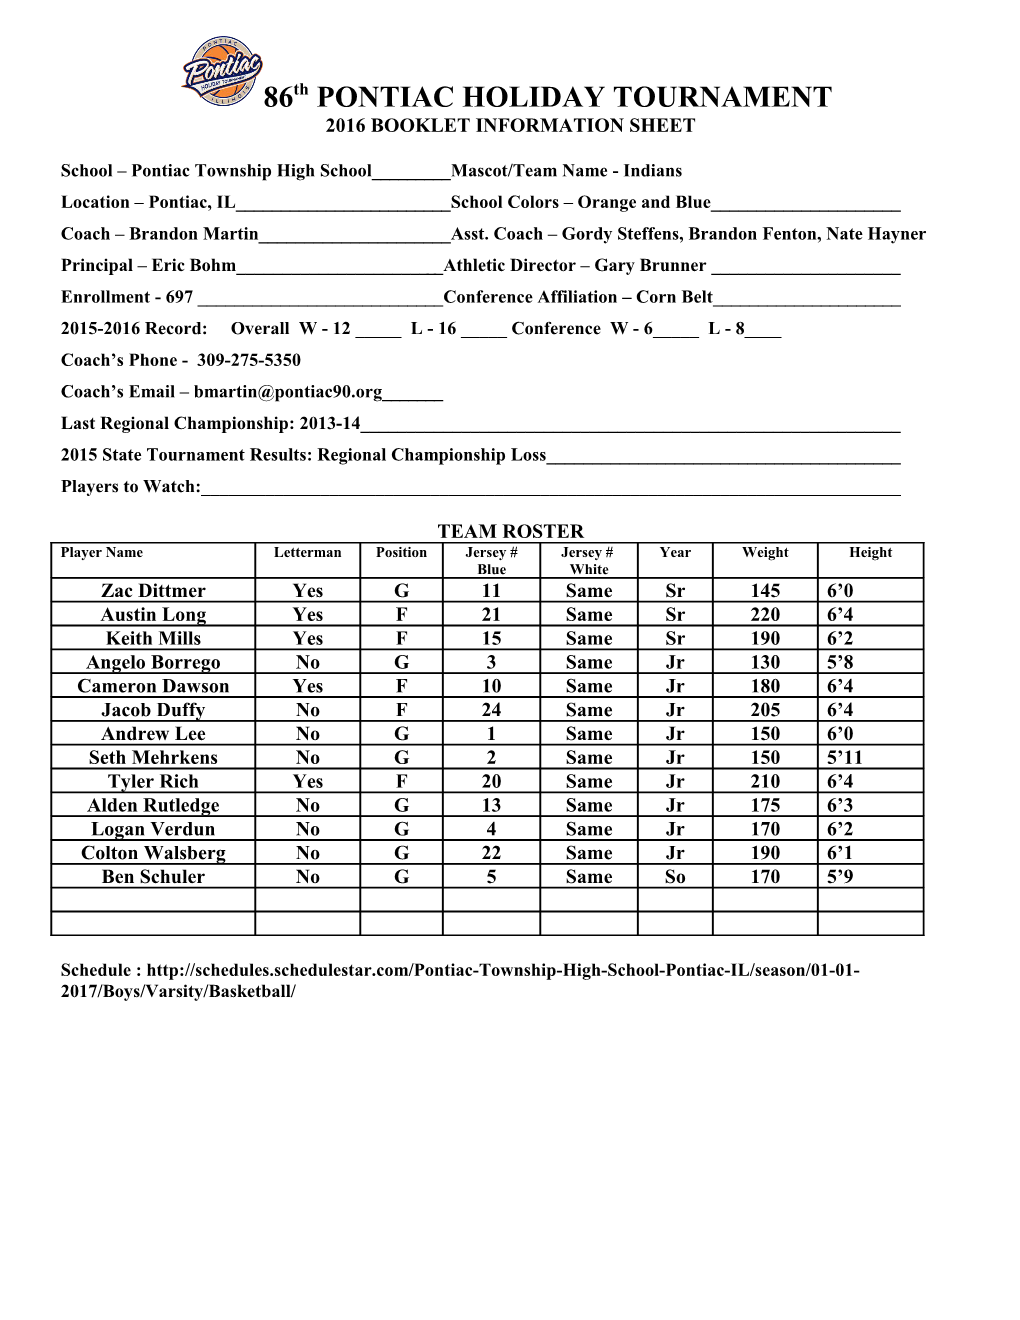 Pontiac Holiday Tournament Booklet Information Sheet